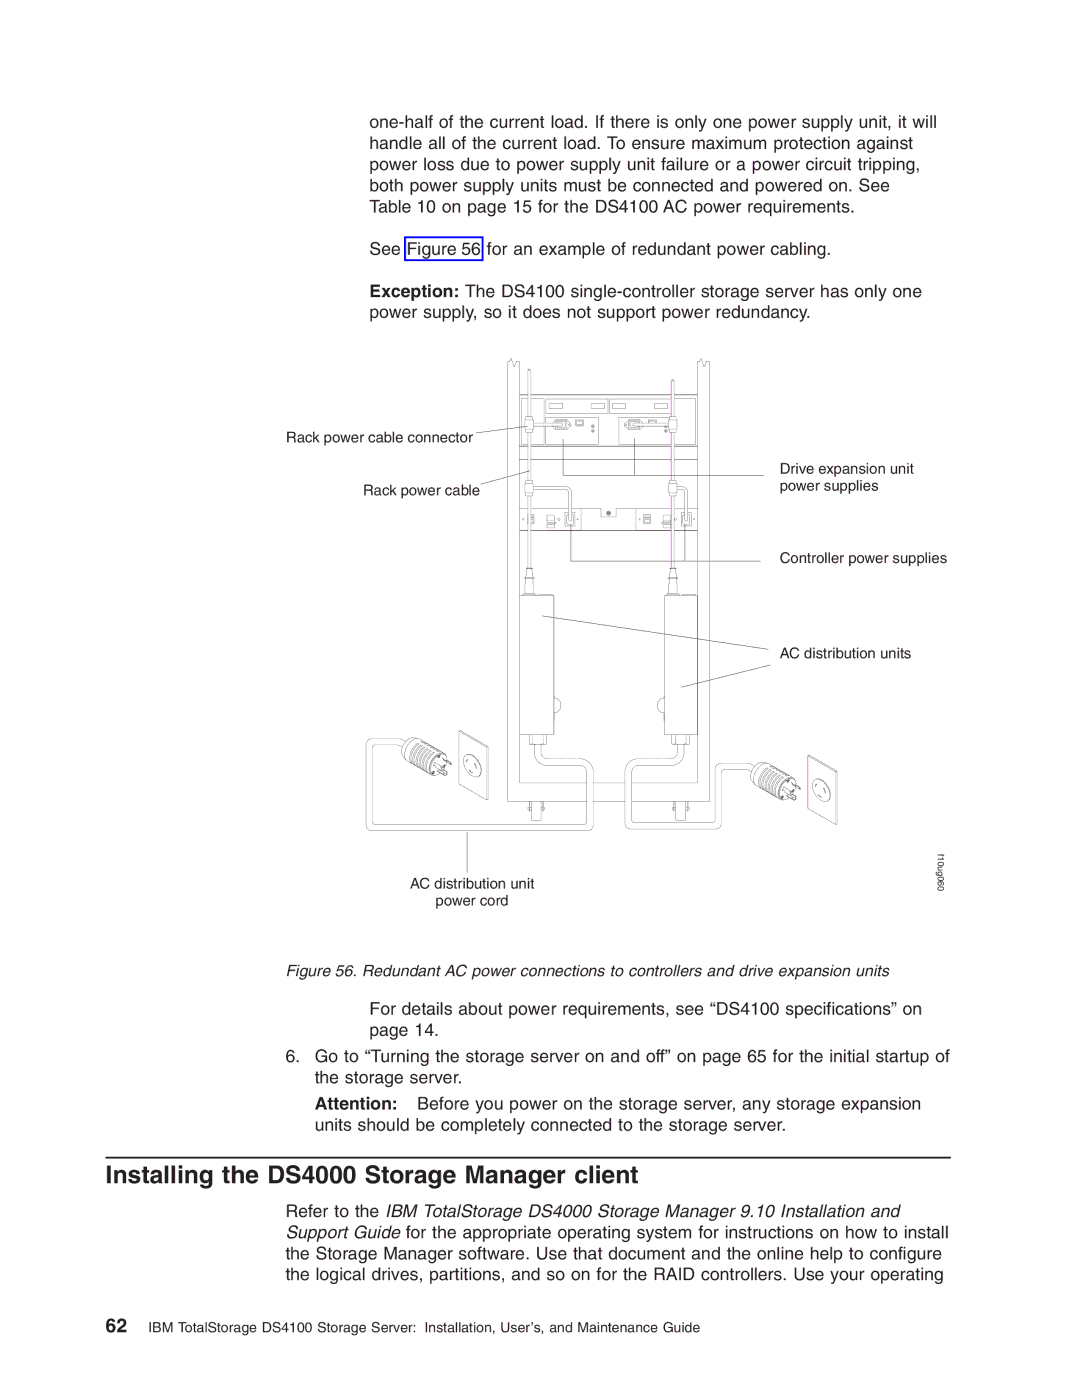 IBM Partner Pavilion DS4100 manual Installing the DS4000 Storage Manager client 